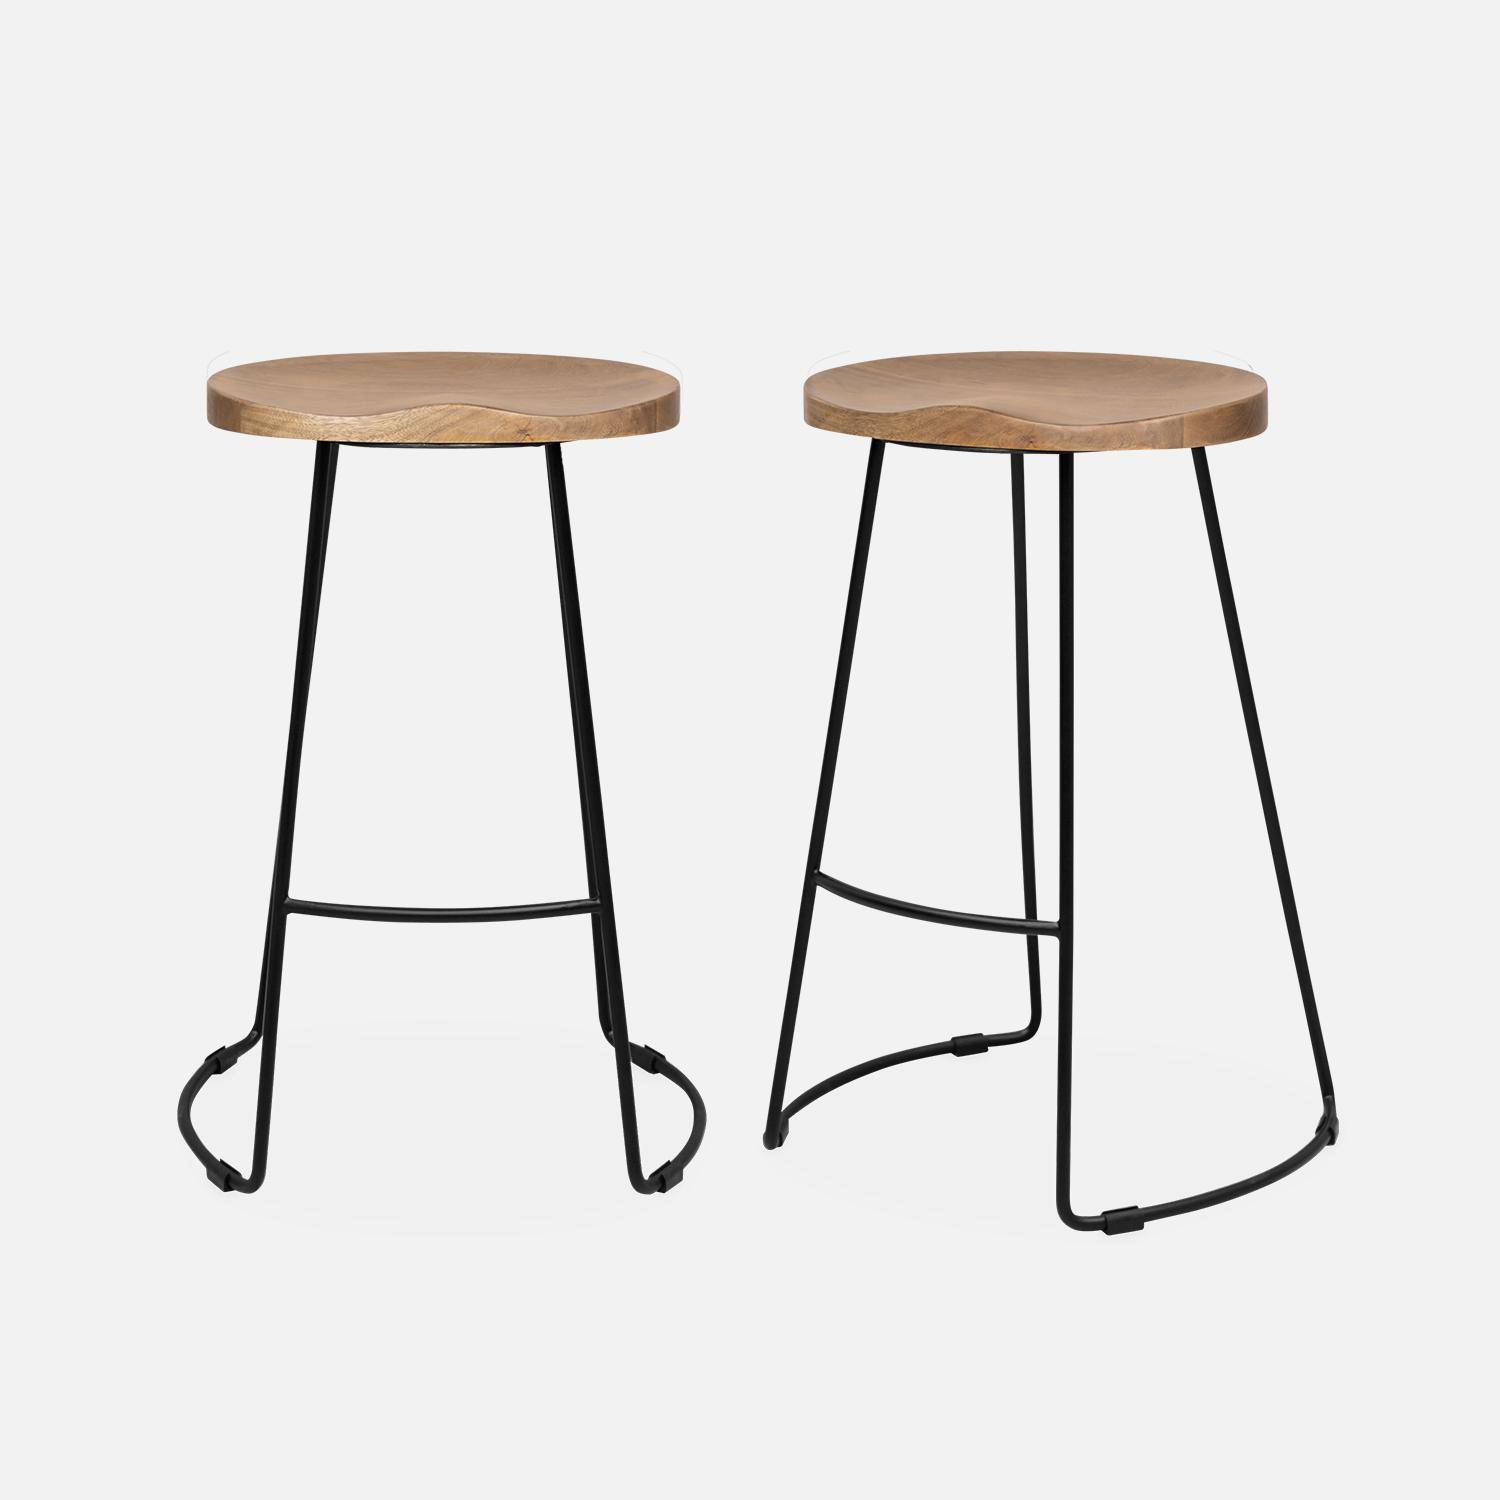 Pair of industrial metal and wooden bar stools, 44x36x65cm, Jaya, Natural, Mango wood seat, black metal legs,sweeek,Photo3